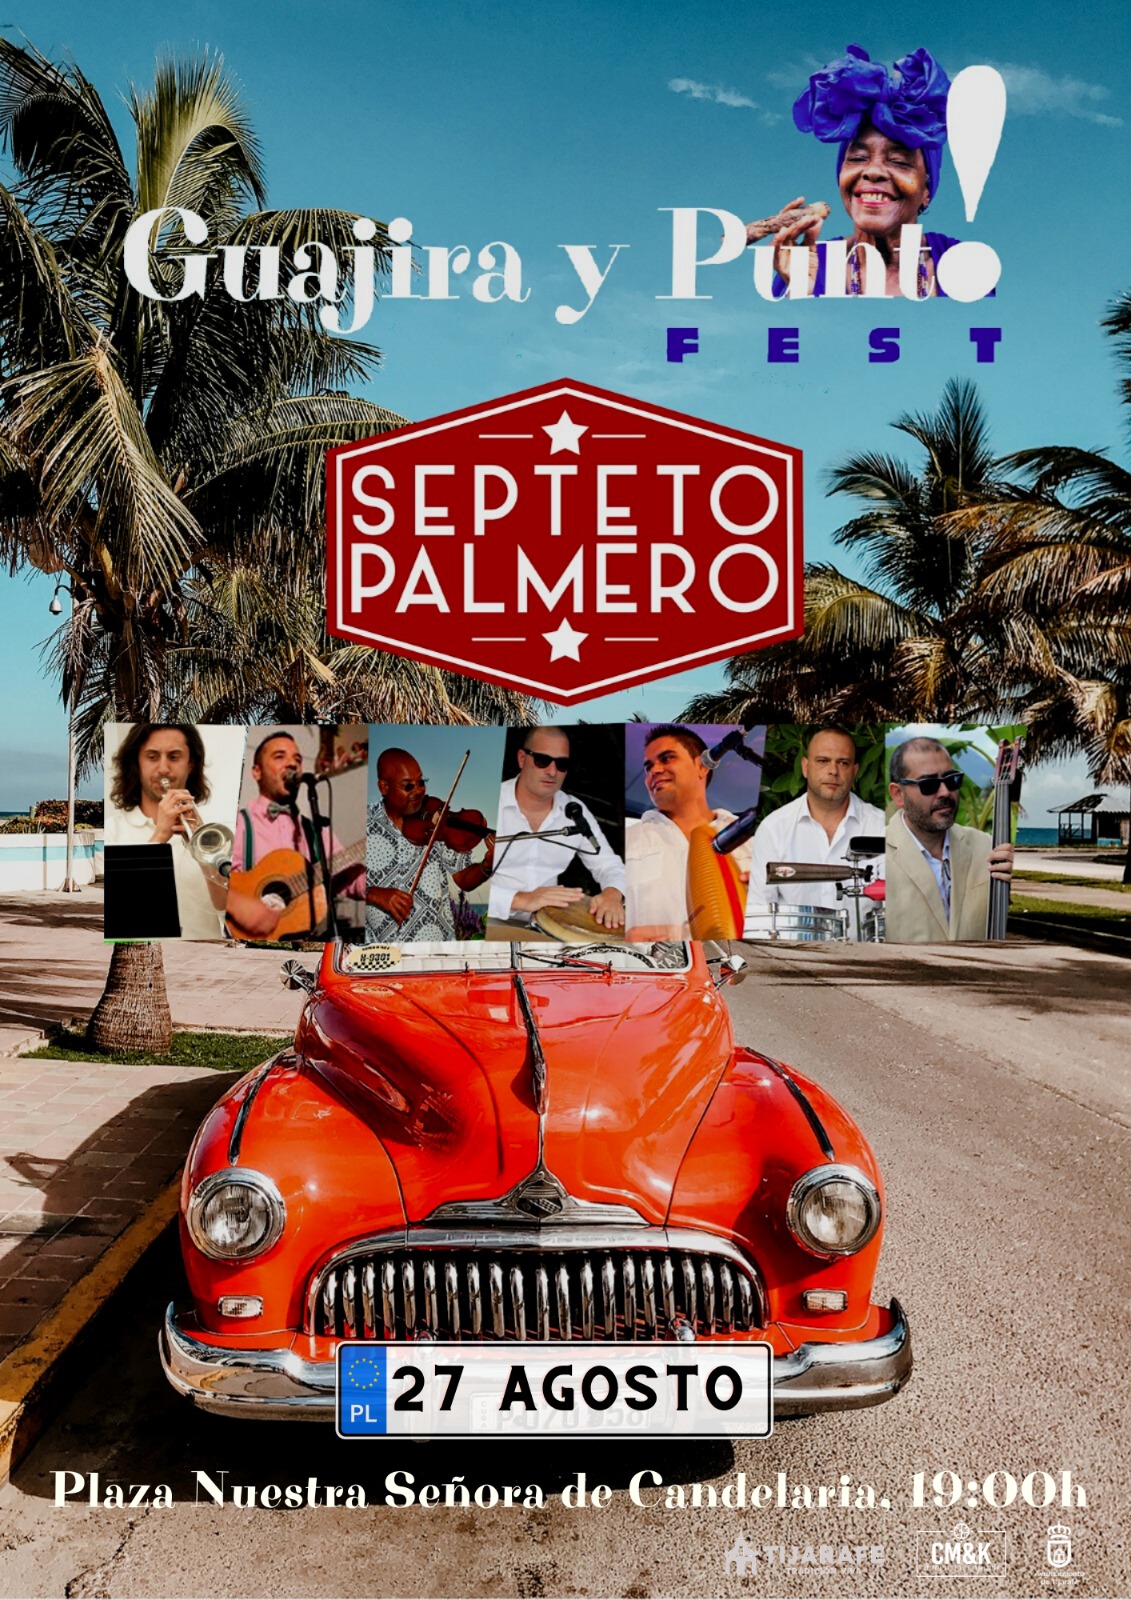 Guajira y Punto! Fest: Septeto Palmero